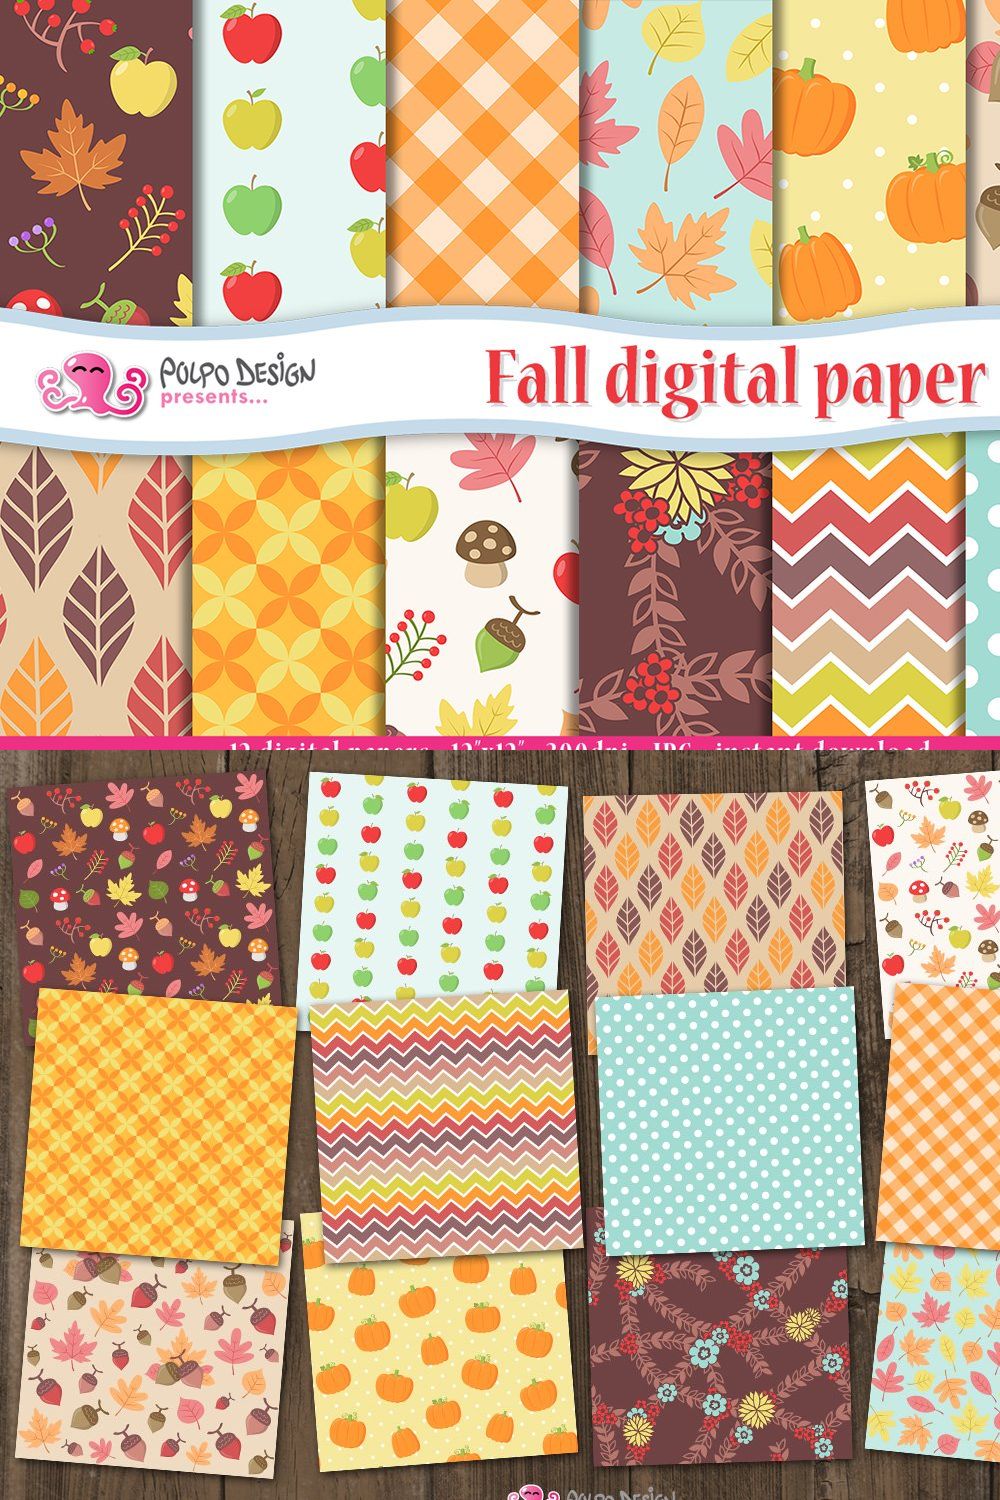 Fall digital paper pinterest preview image.